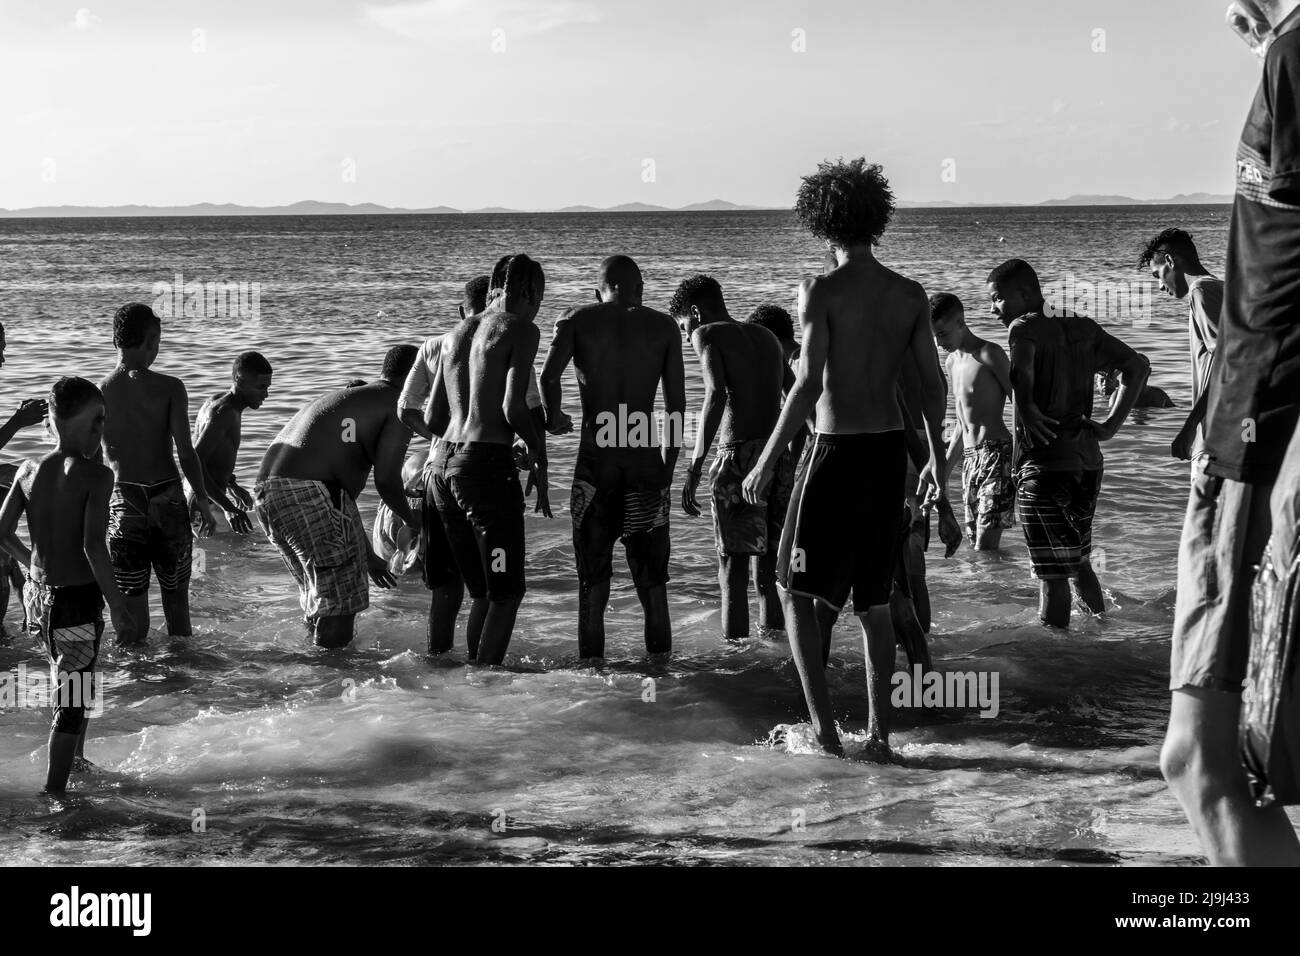 People at Ribeira beach in Salvador Bahia, having fun in the water. Stock Photo